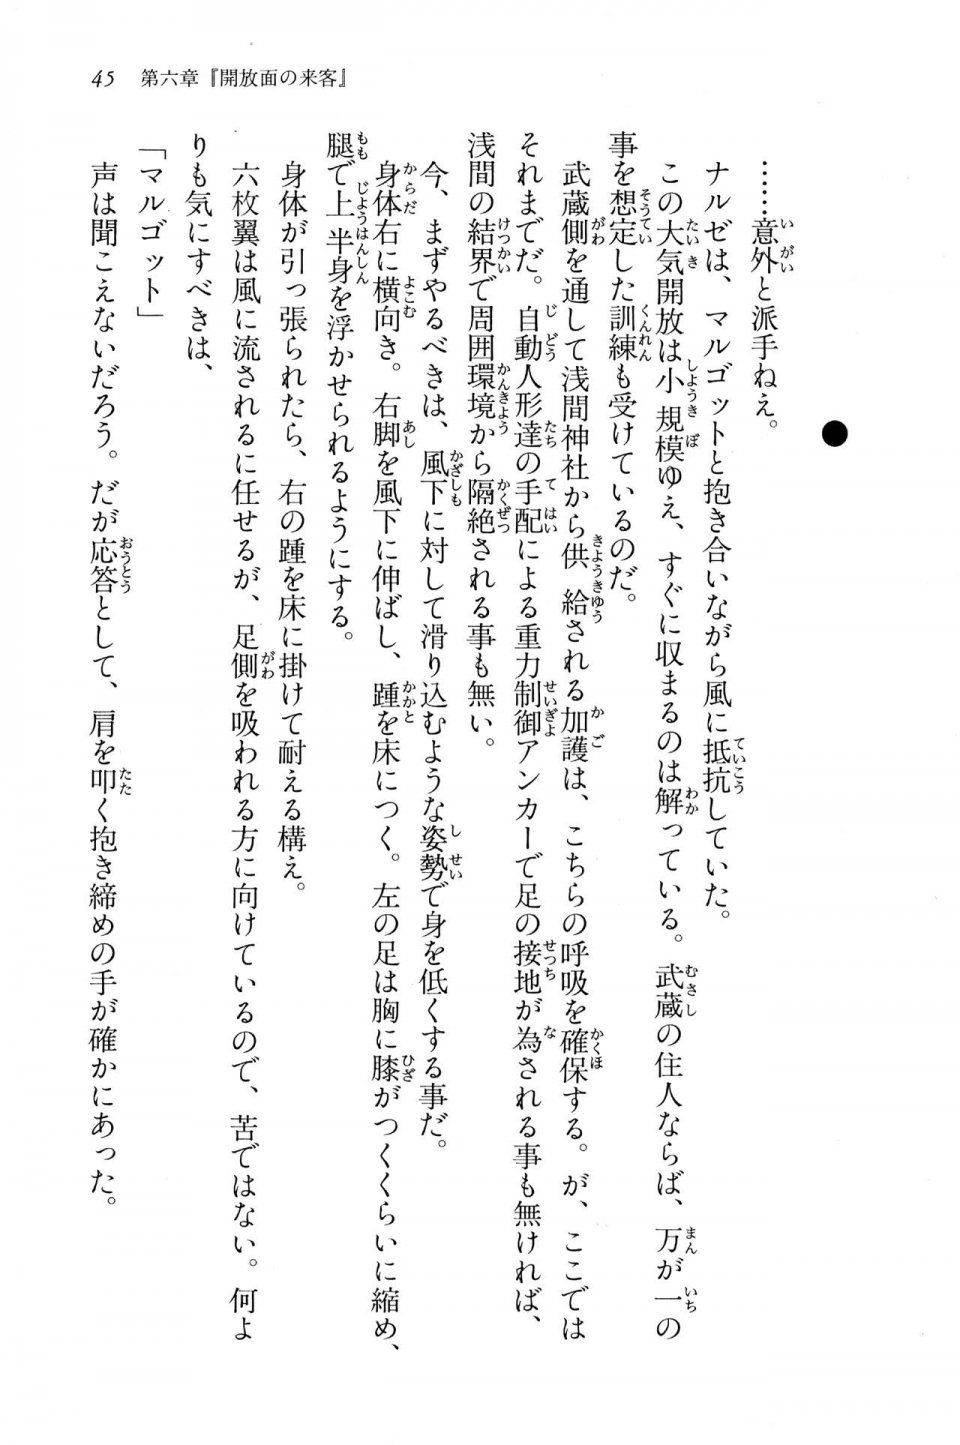 Kyoukai Senjou no Horizon BD Special Mininovel Vol 6(3B) - Photo #49